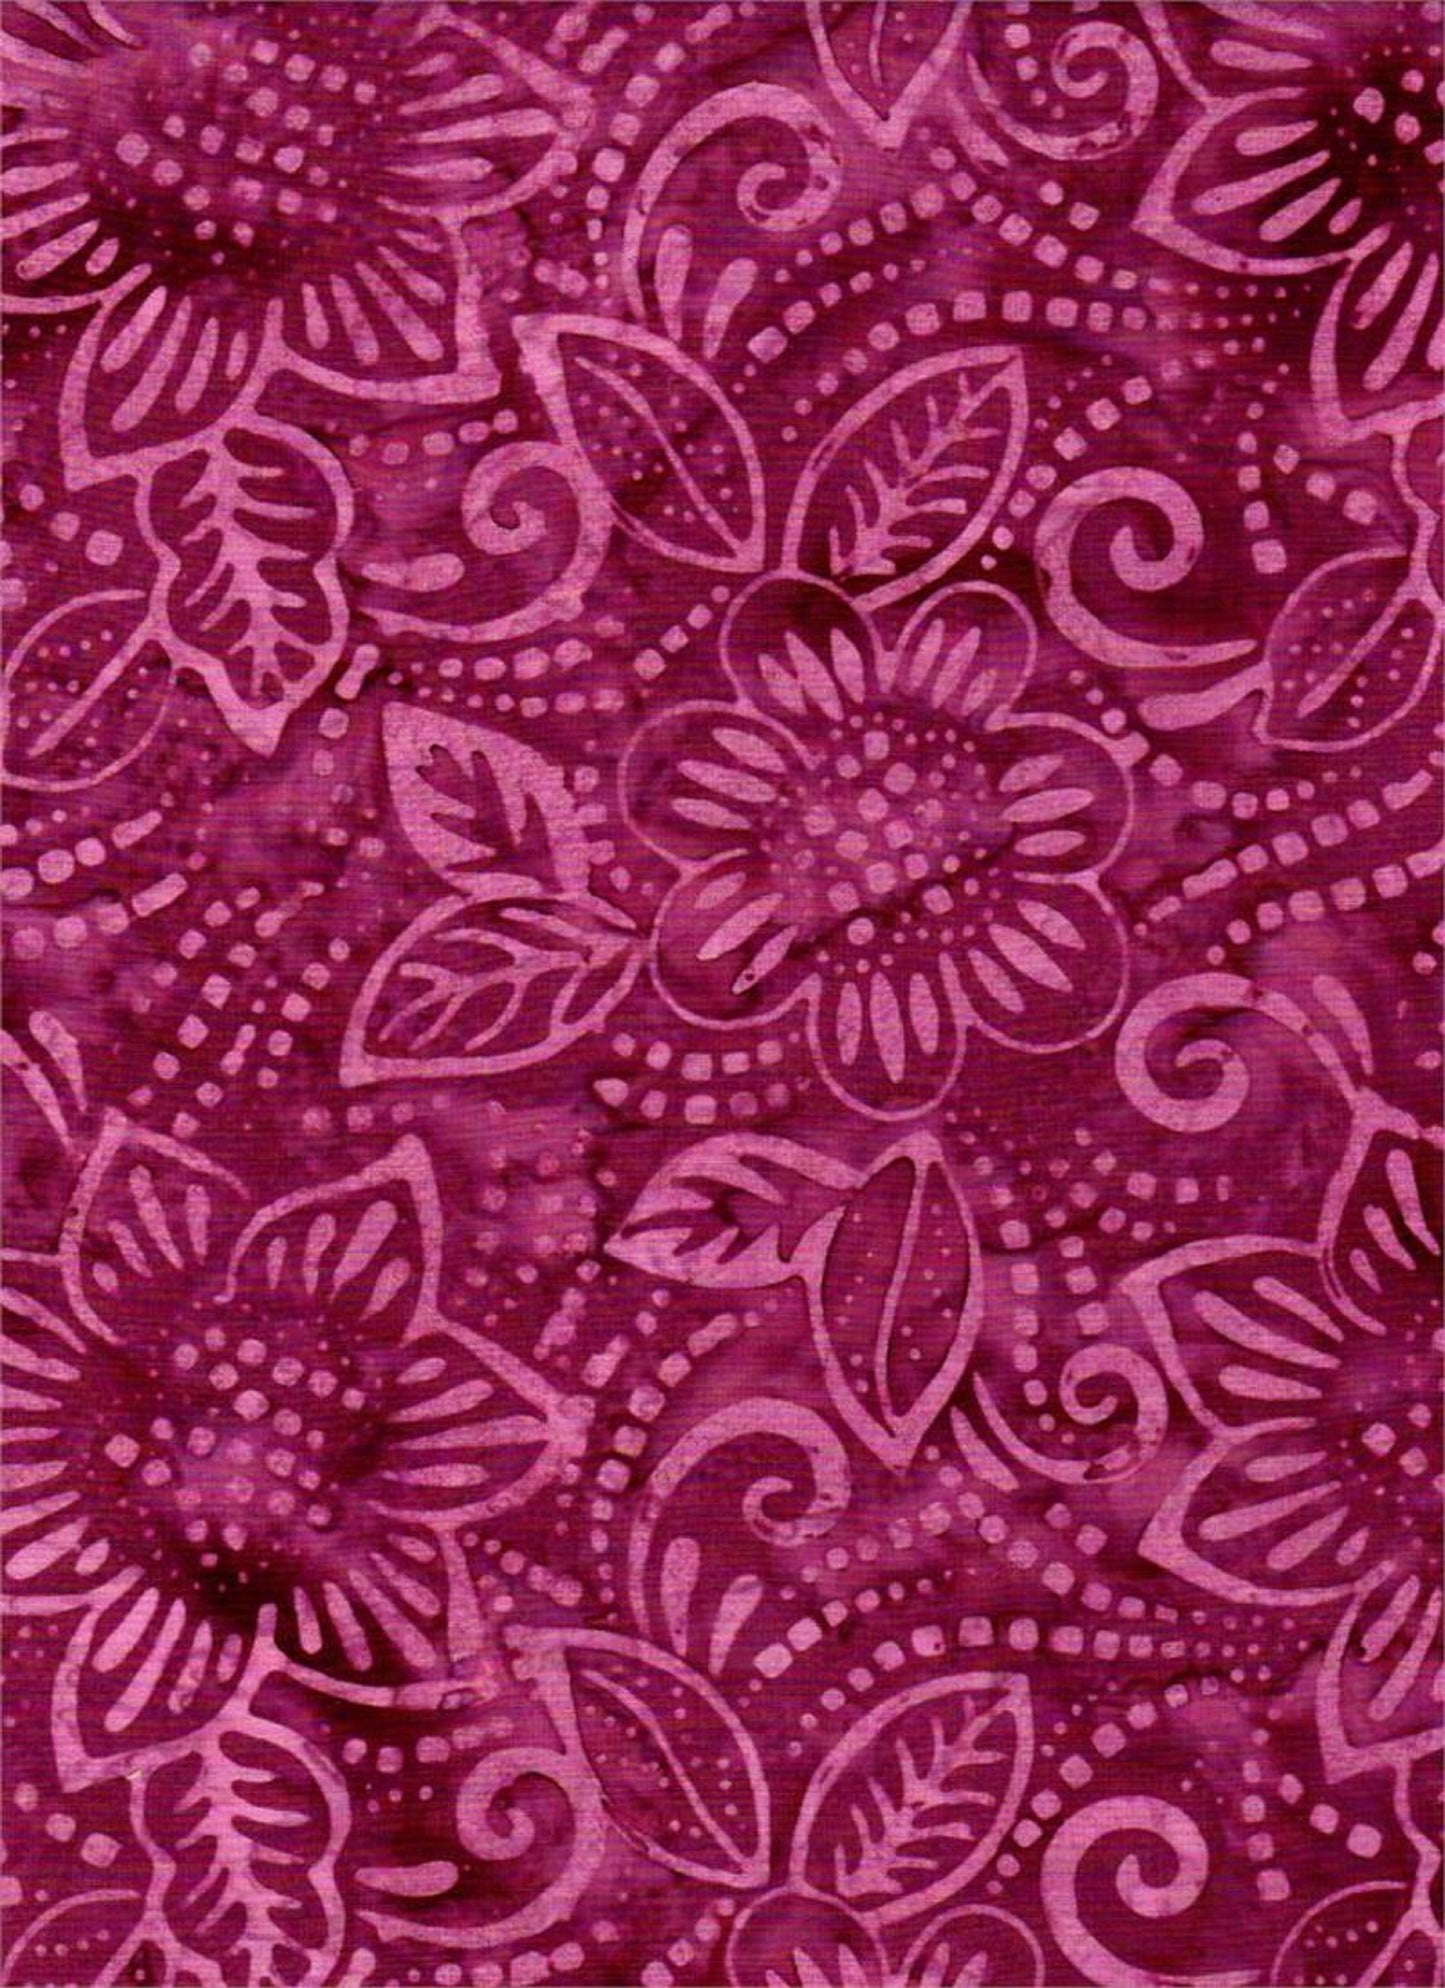 Batik Textiles-Novelty Floral Print in Light & Dark Burgundy #4717-Semangka Col.